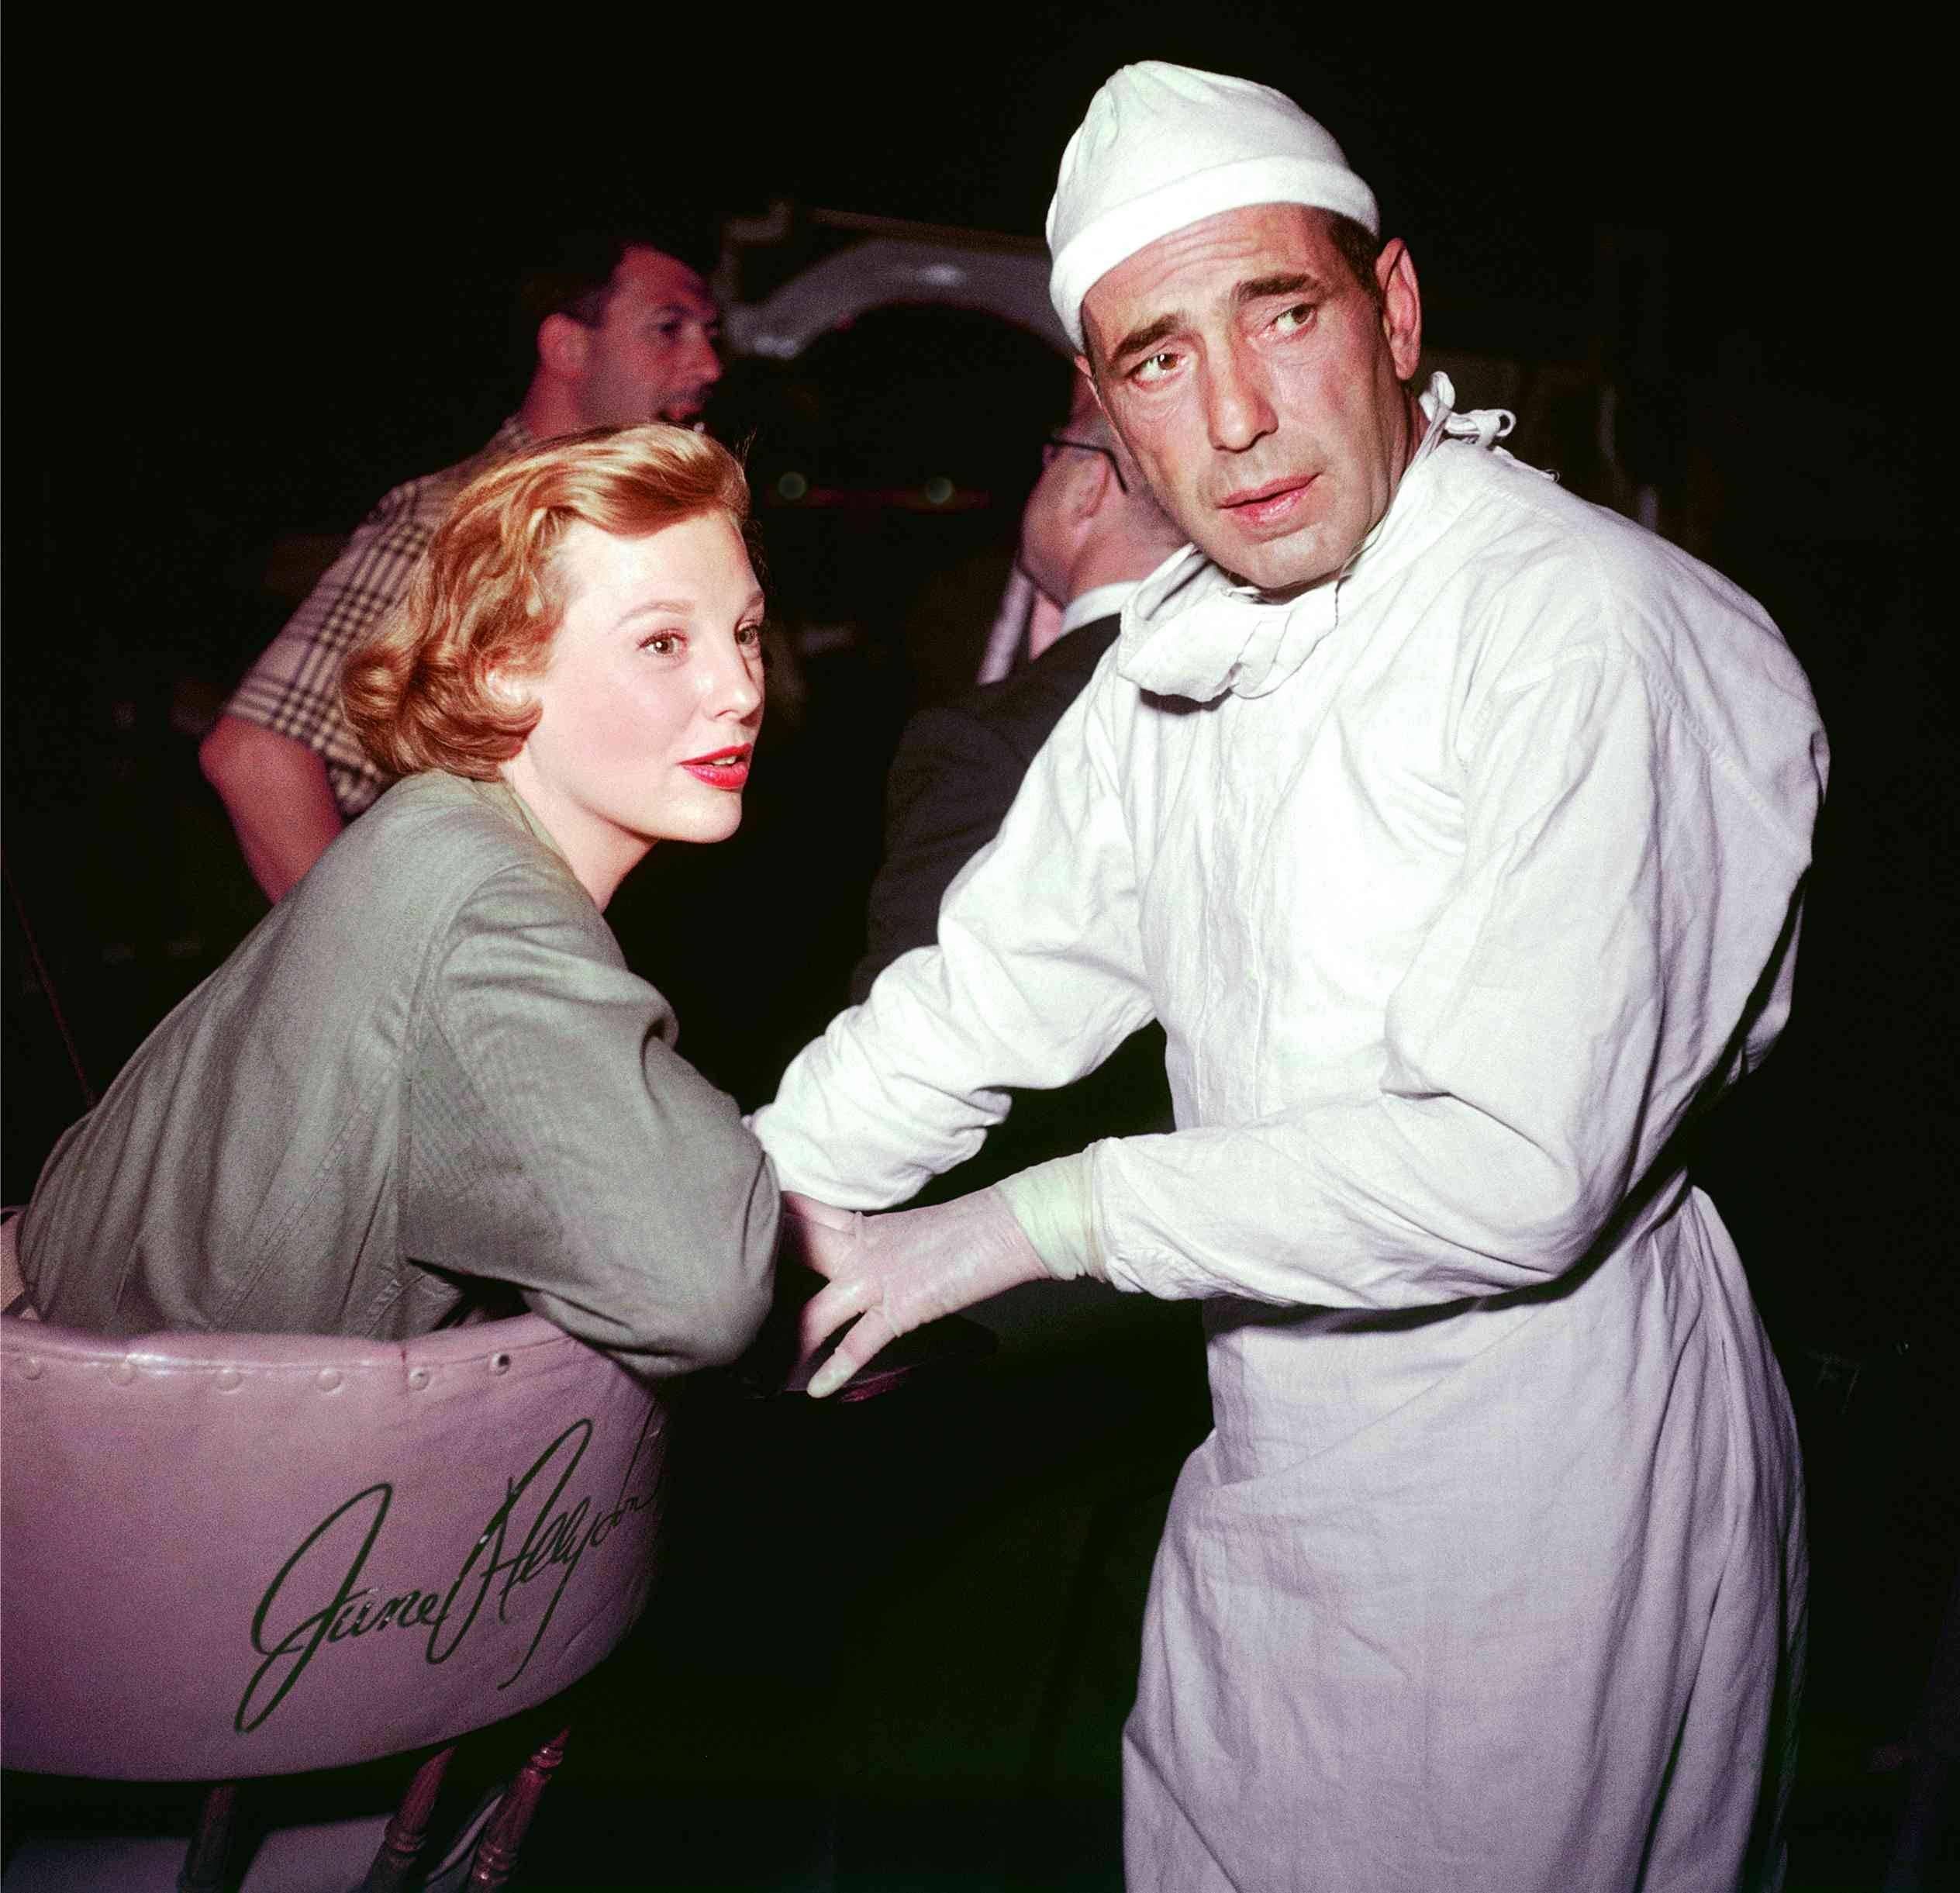 Frank Worth Color Photograph - Humphrey Bogart and June Allyson on Set of "Battle Circus" Fine Art Print